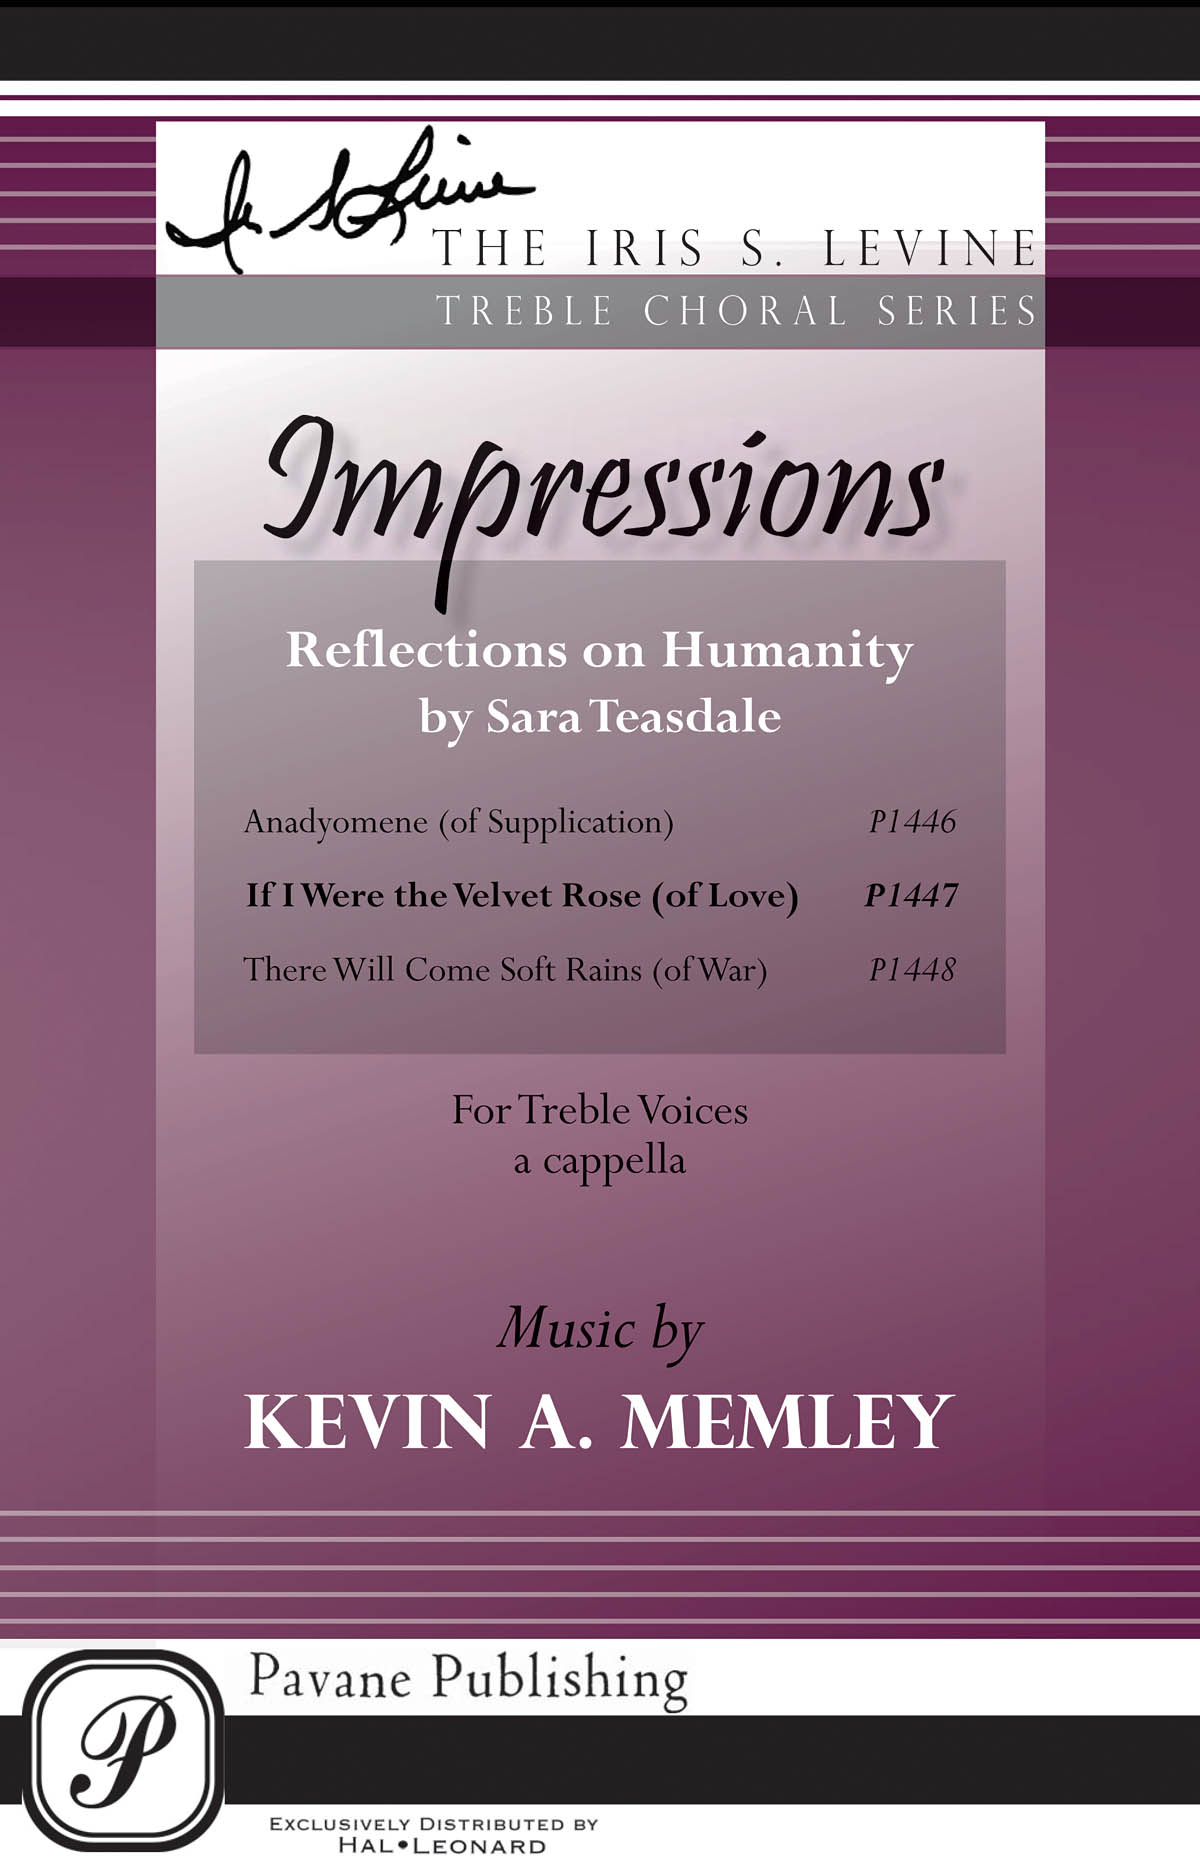 Kevin Memley: If I Were the Velvet Rose (SSAA)